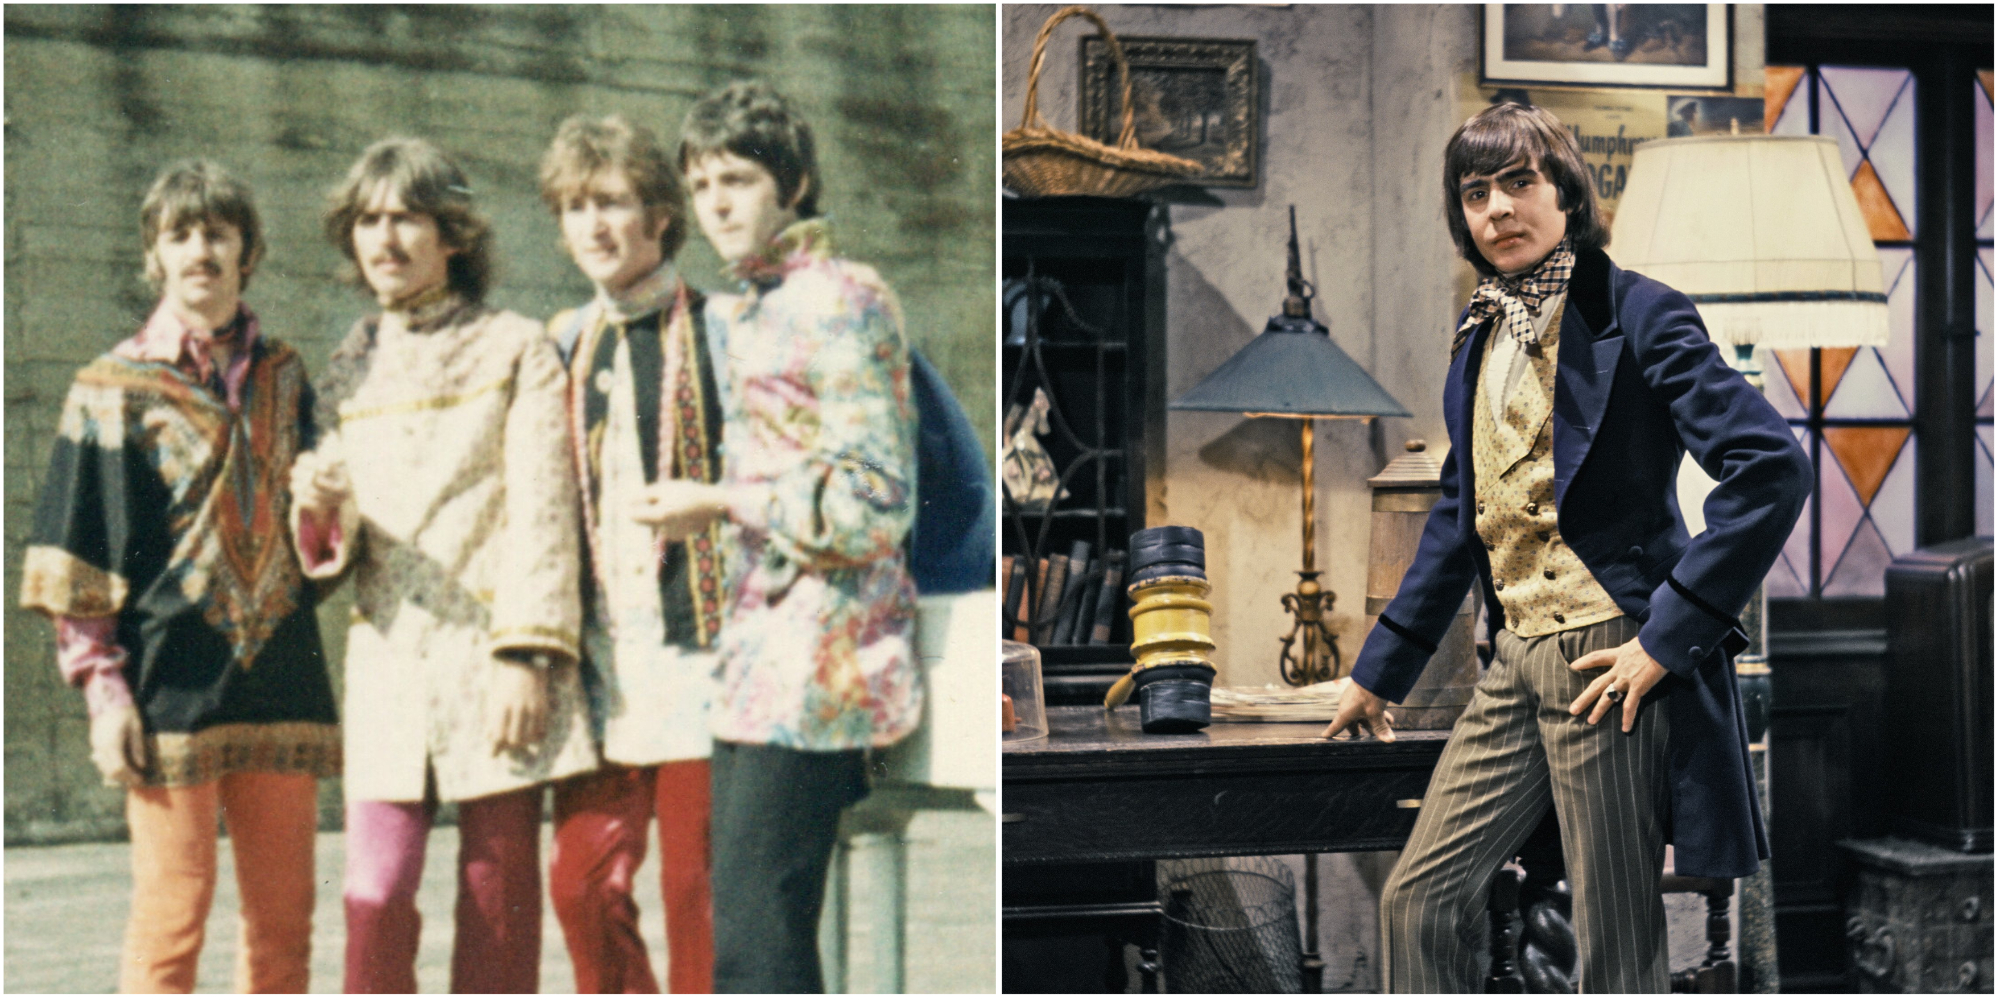 The Beatles Ringo Starr, George Harrison, John Lennon, Paul McCartney and The Monkees Davy Jones pose in side by side photographs.